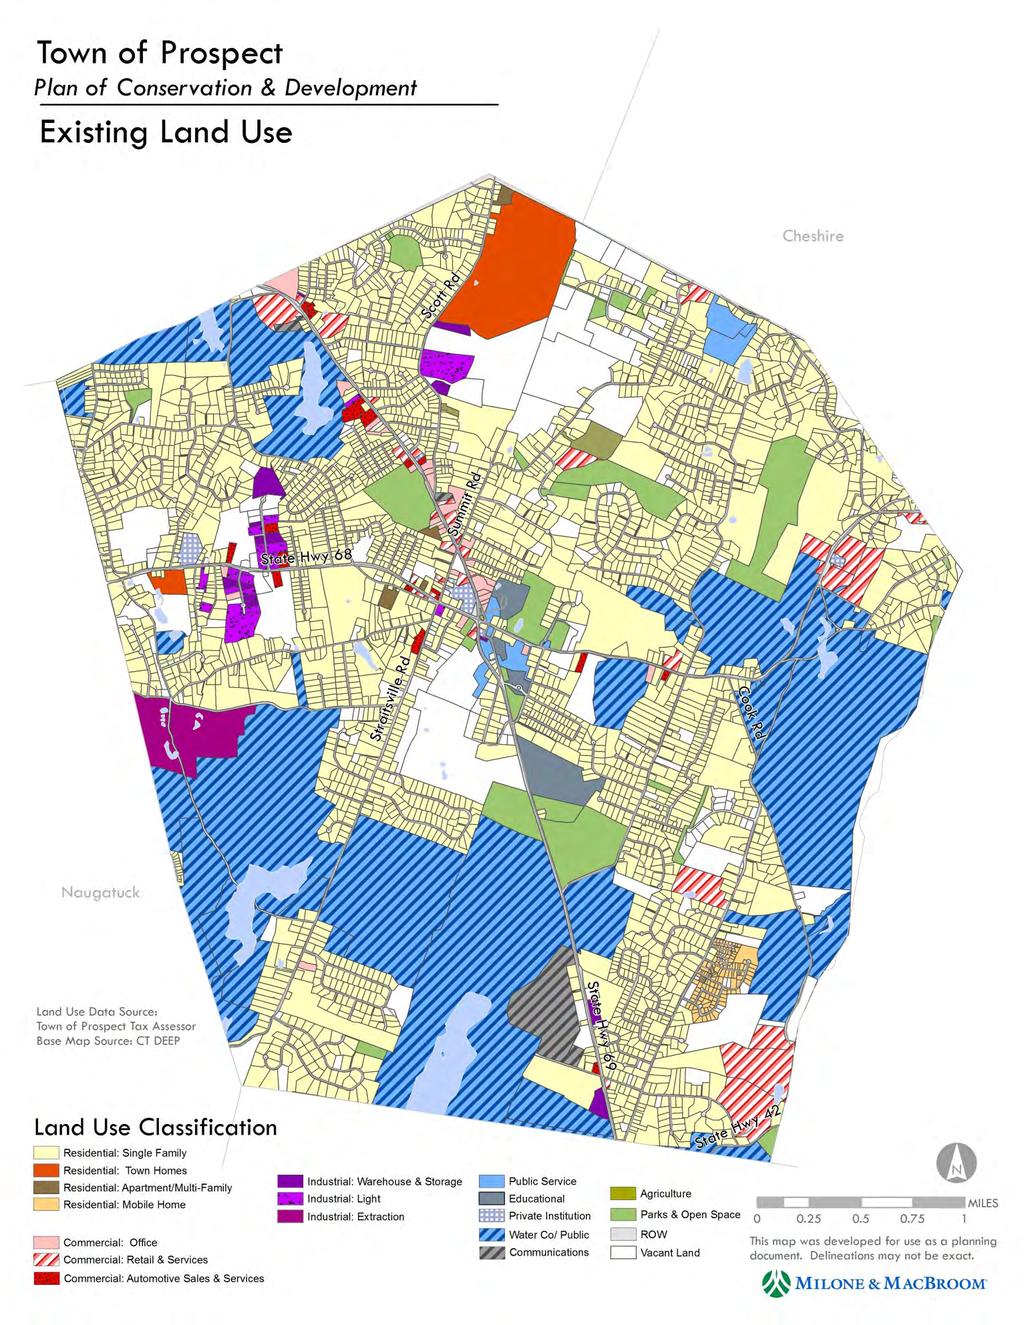 MAP 6 Prospect 2013 Plan of